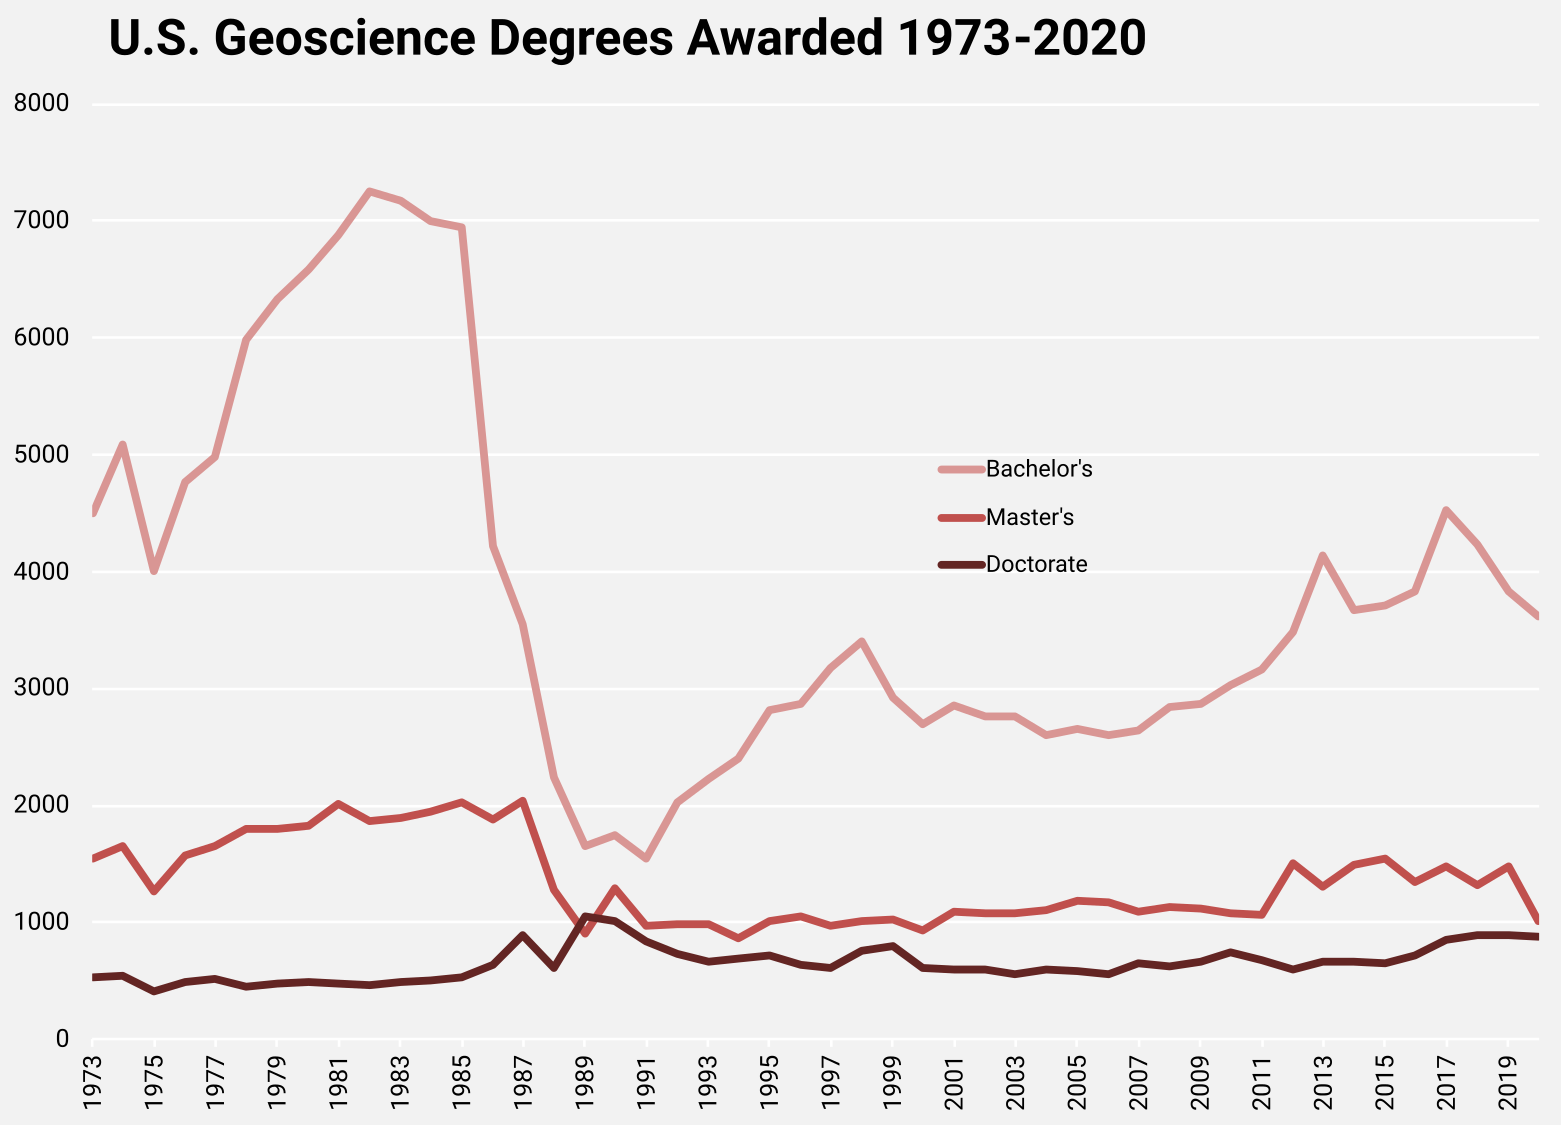 U.S. Geoscience Degrees Awarded 1973-2020